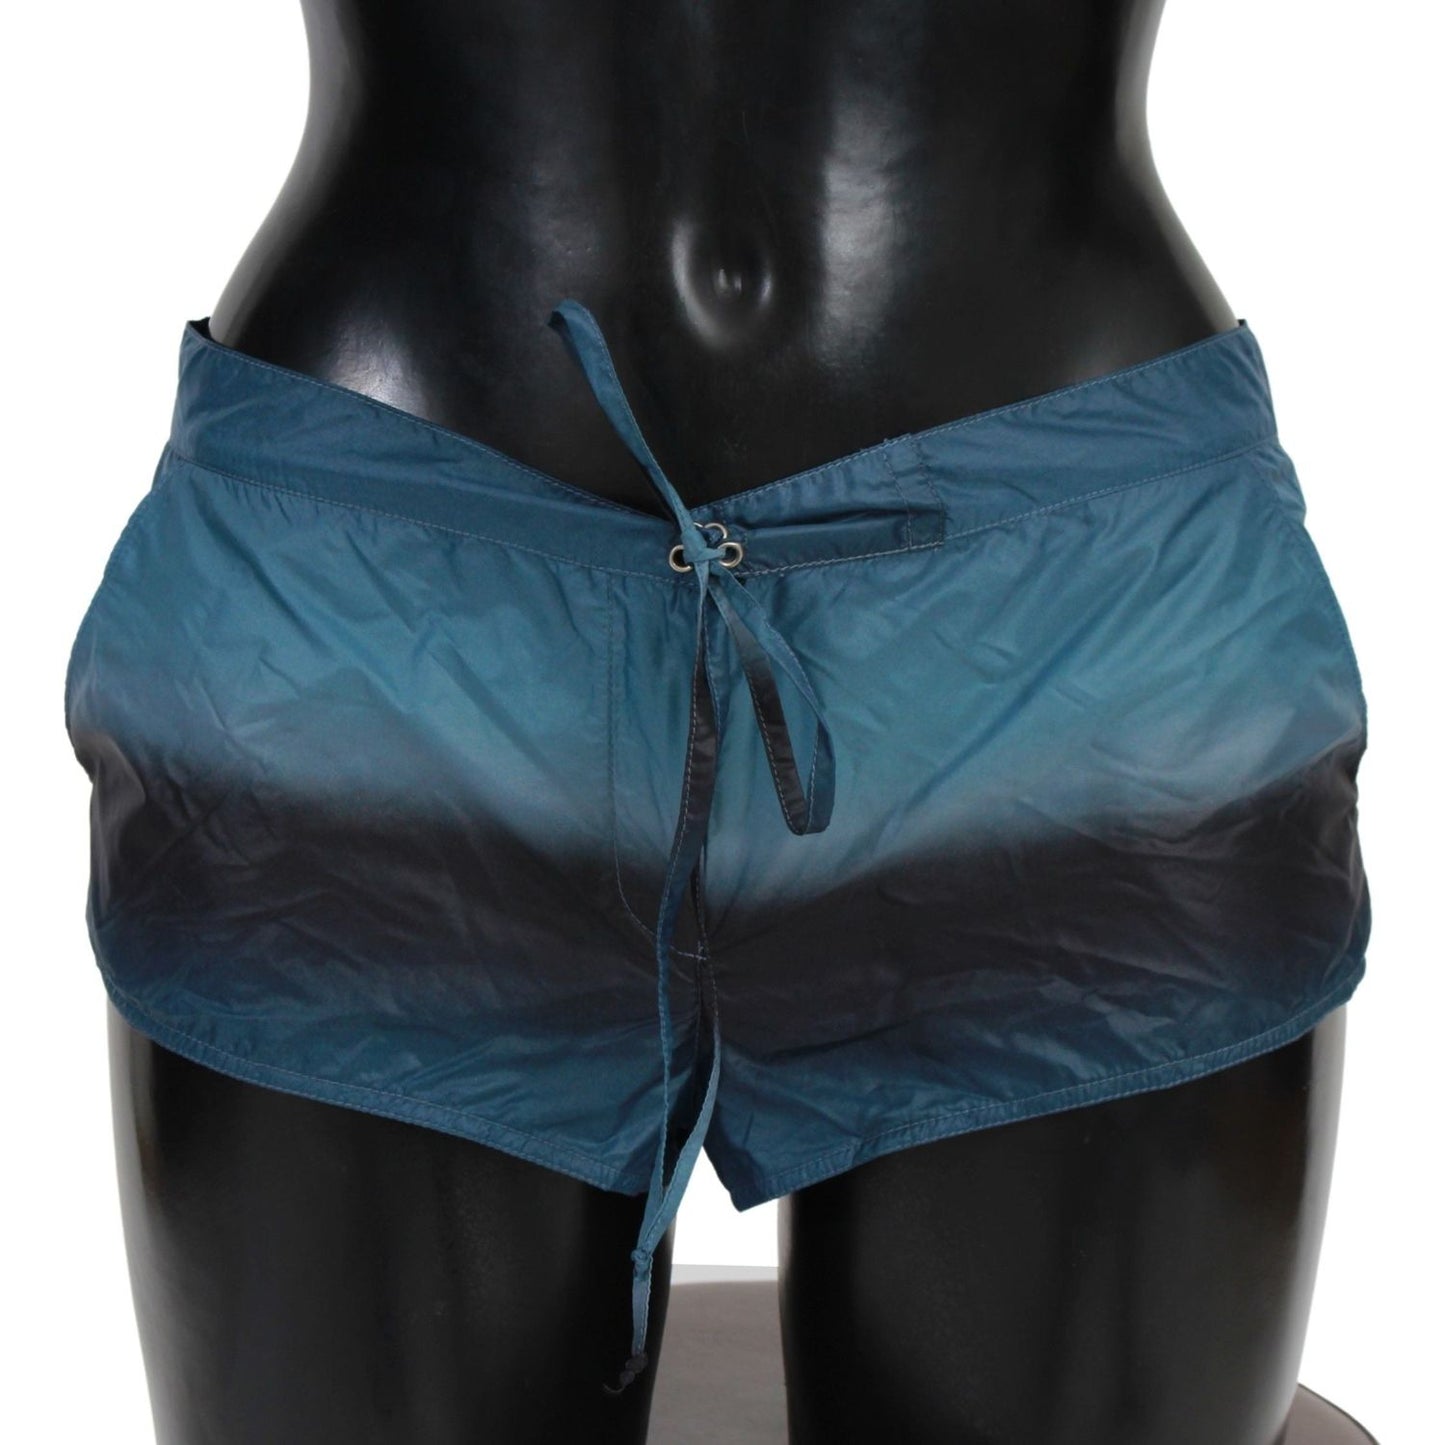 Ermanno Scervino Blue Ombre Shorts Beachwear Bikini Swimsuit blue-ombre-shorts-beachwear-bikini-swimsuit IMG_0336-76c27a5d-878.jpg